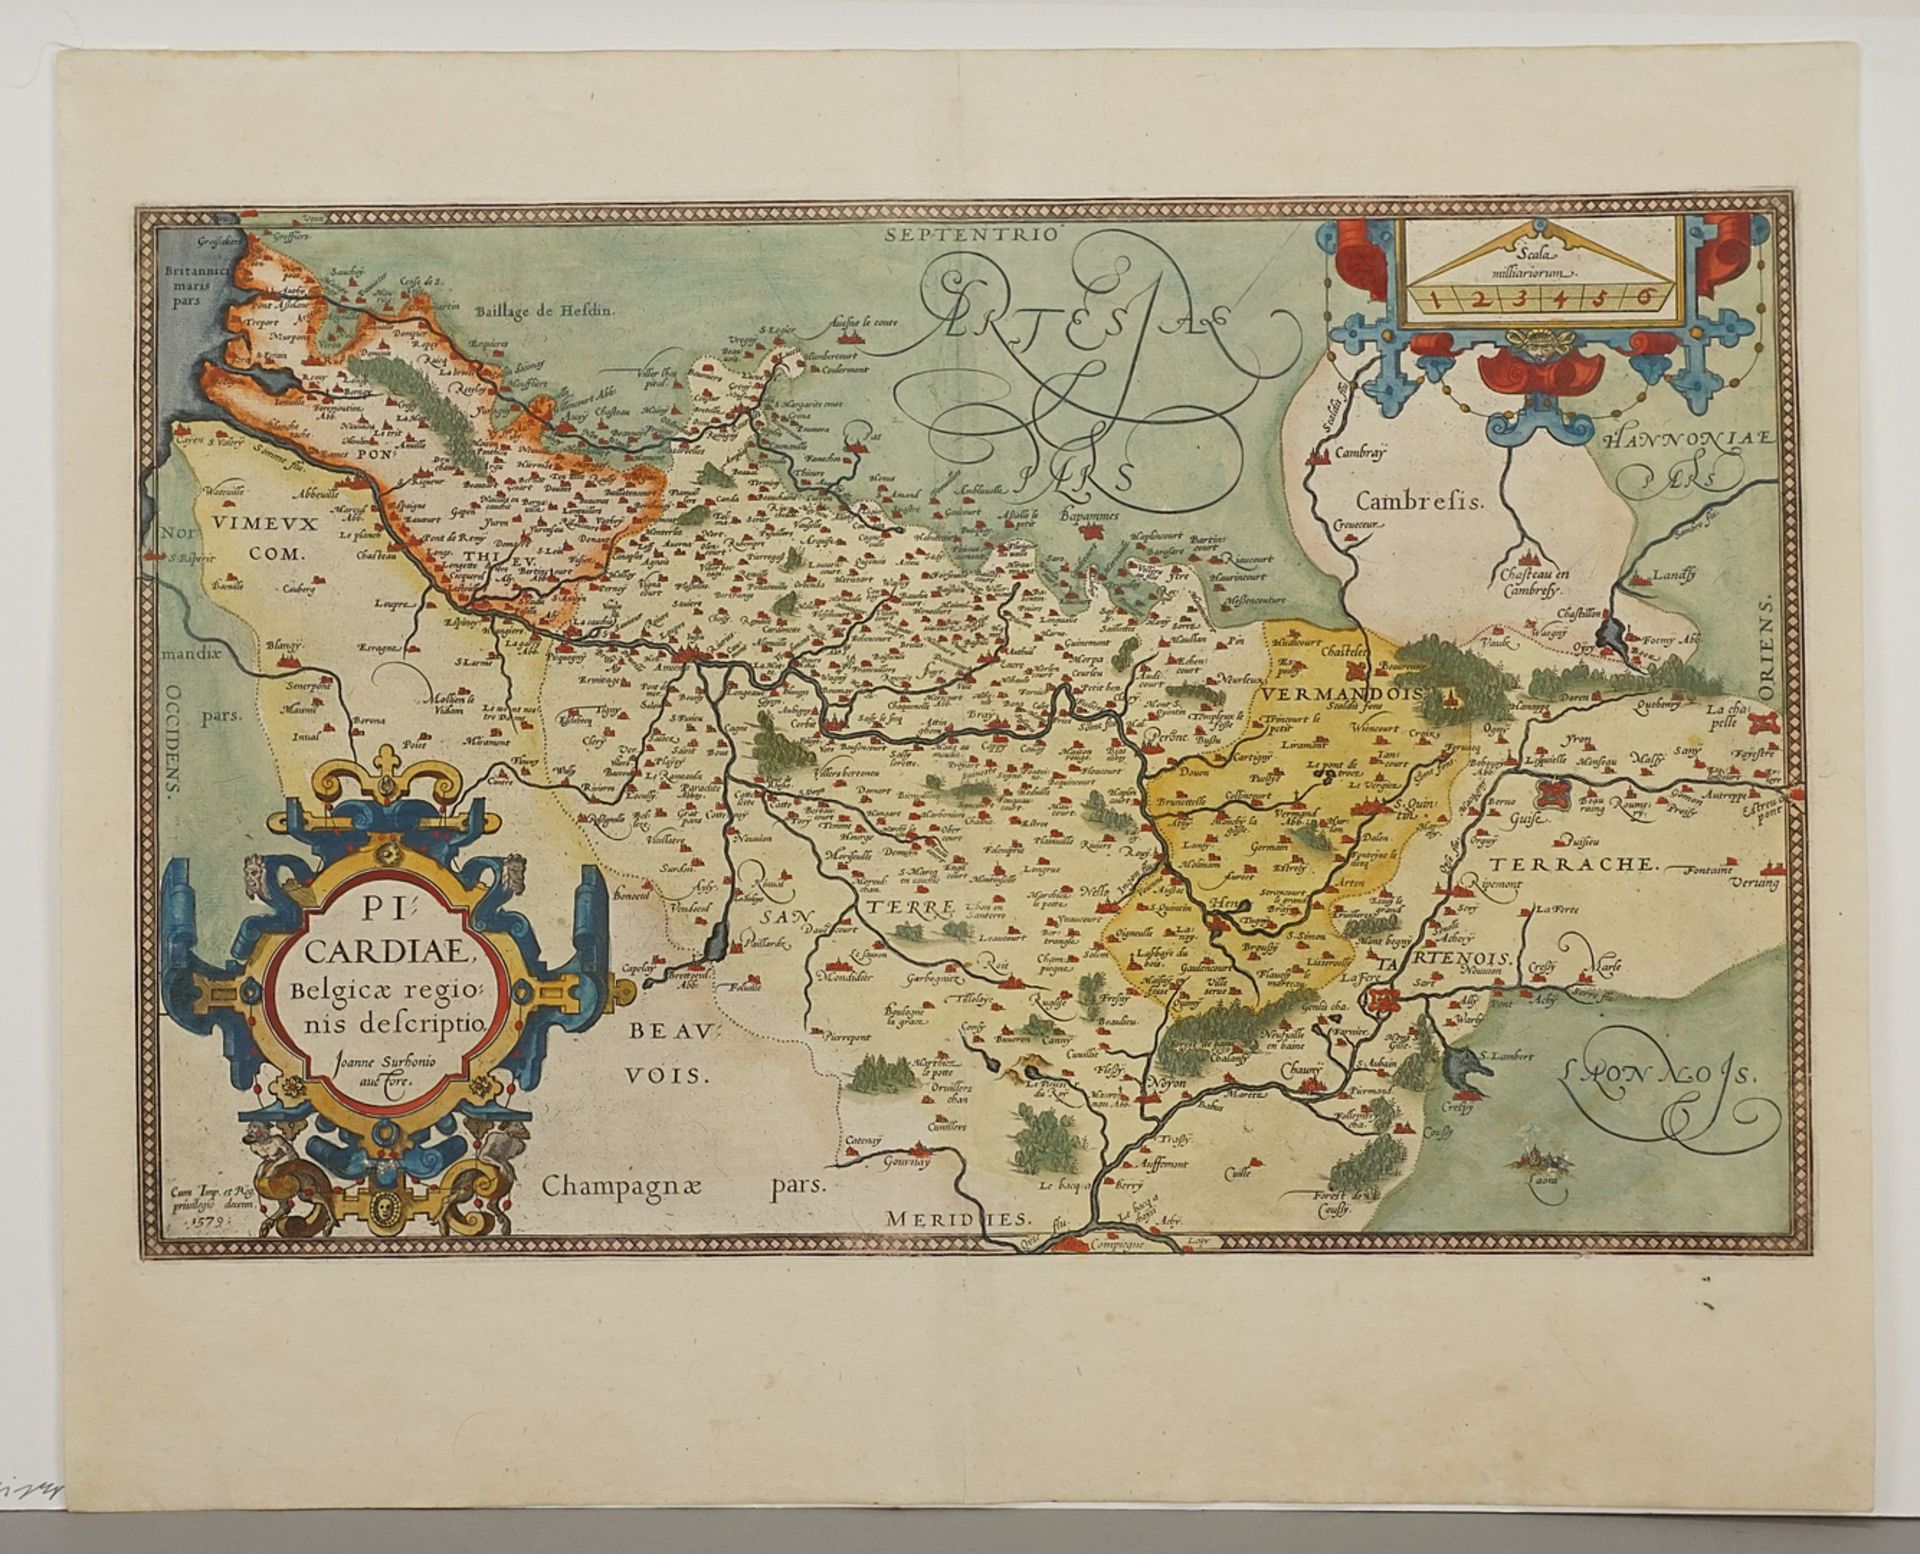 According to Johann Surhon, "Picardiae, Belgicae regionis descriptio" (Map of Picardy) - Image 3 of 4